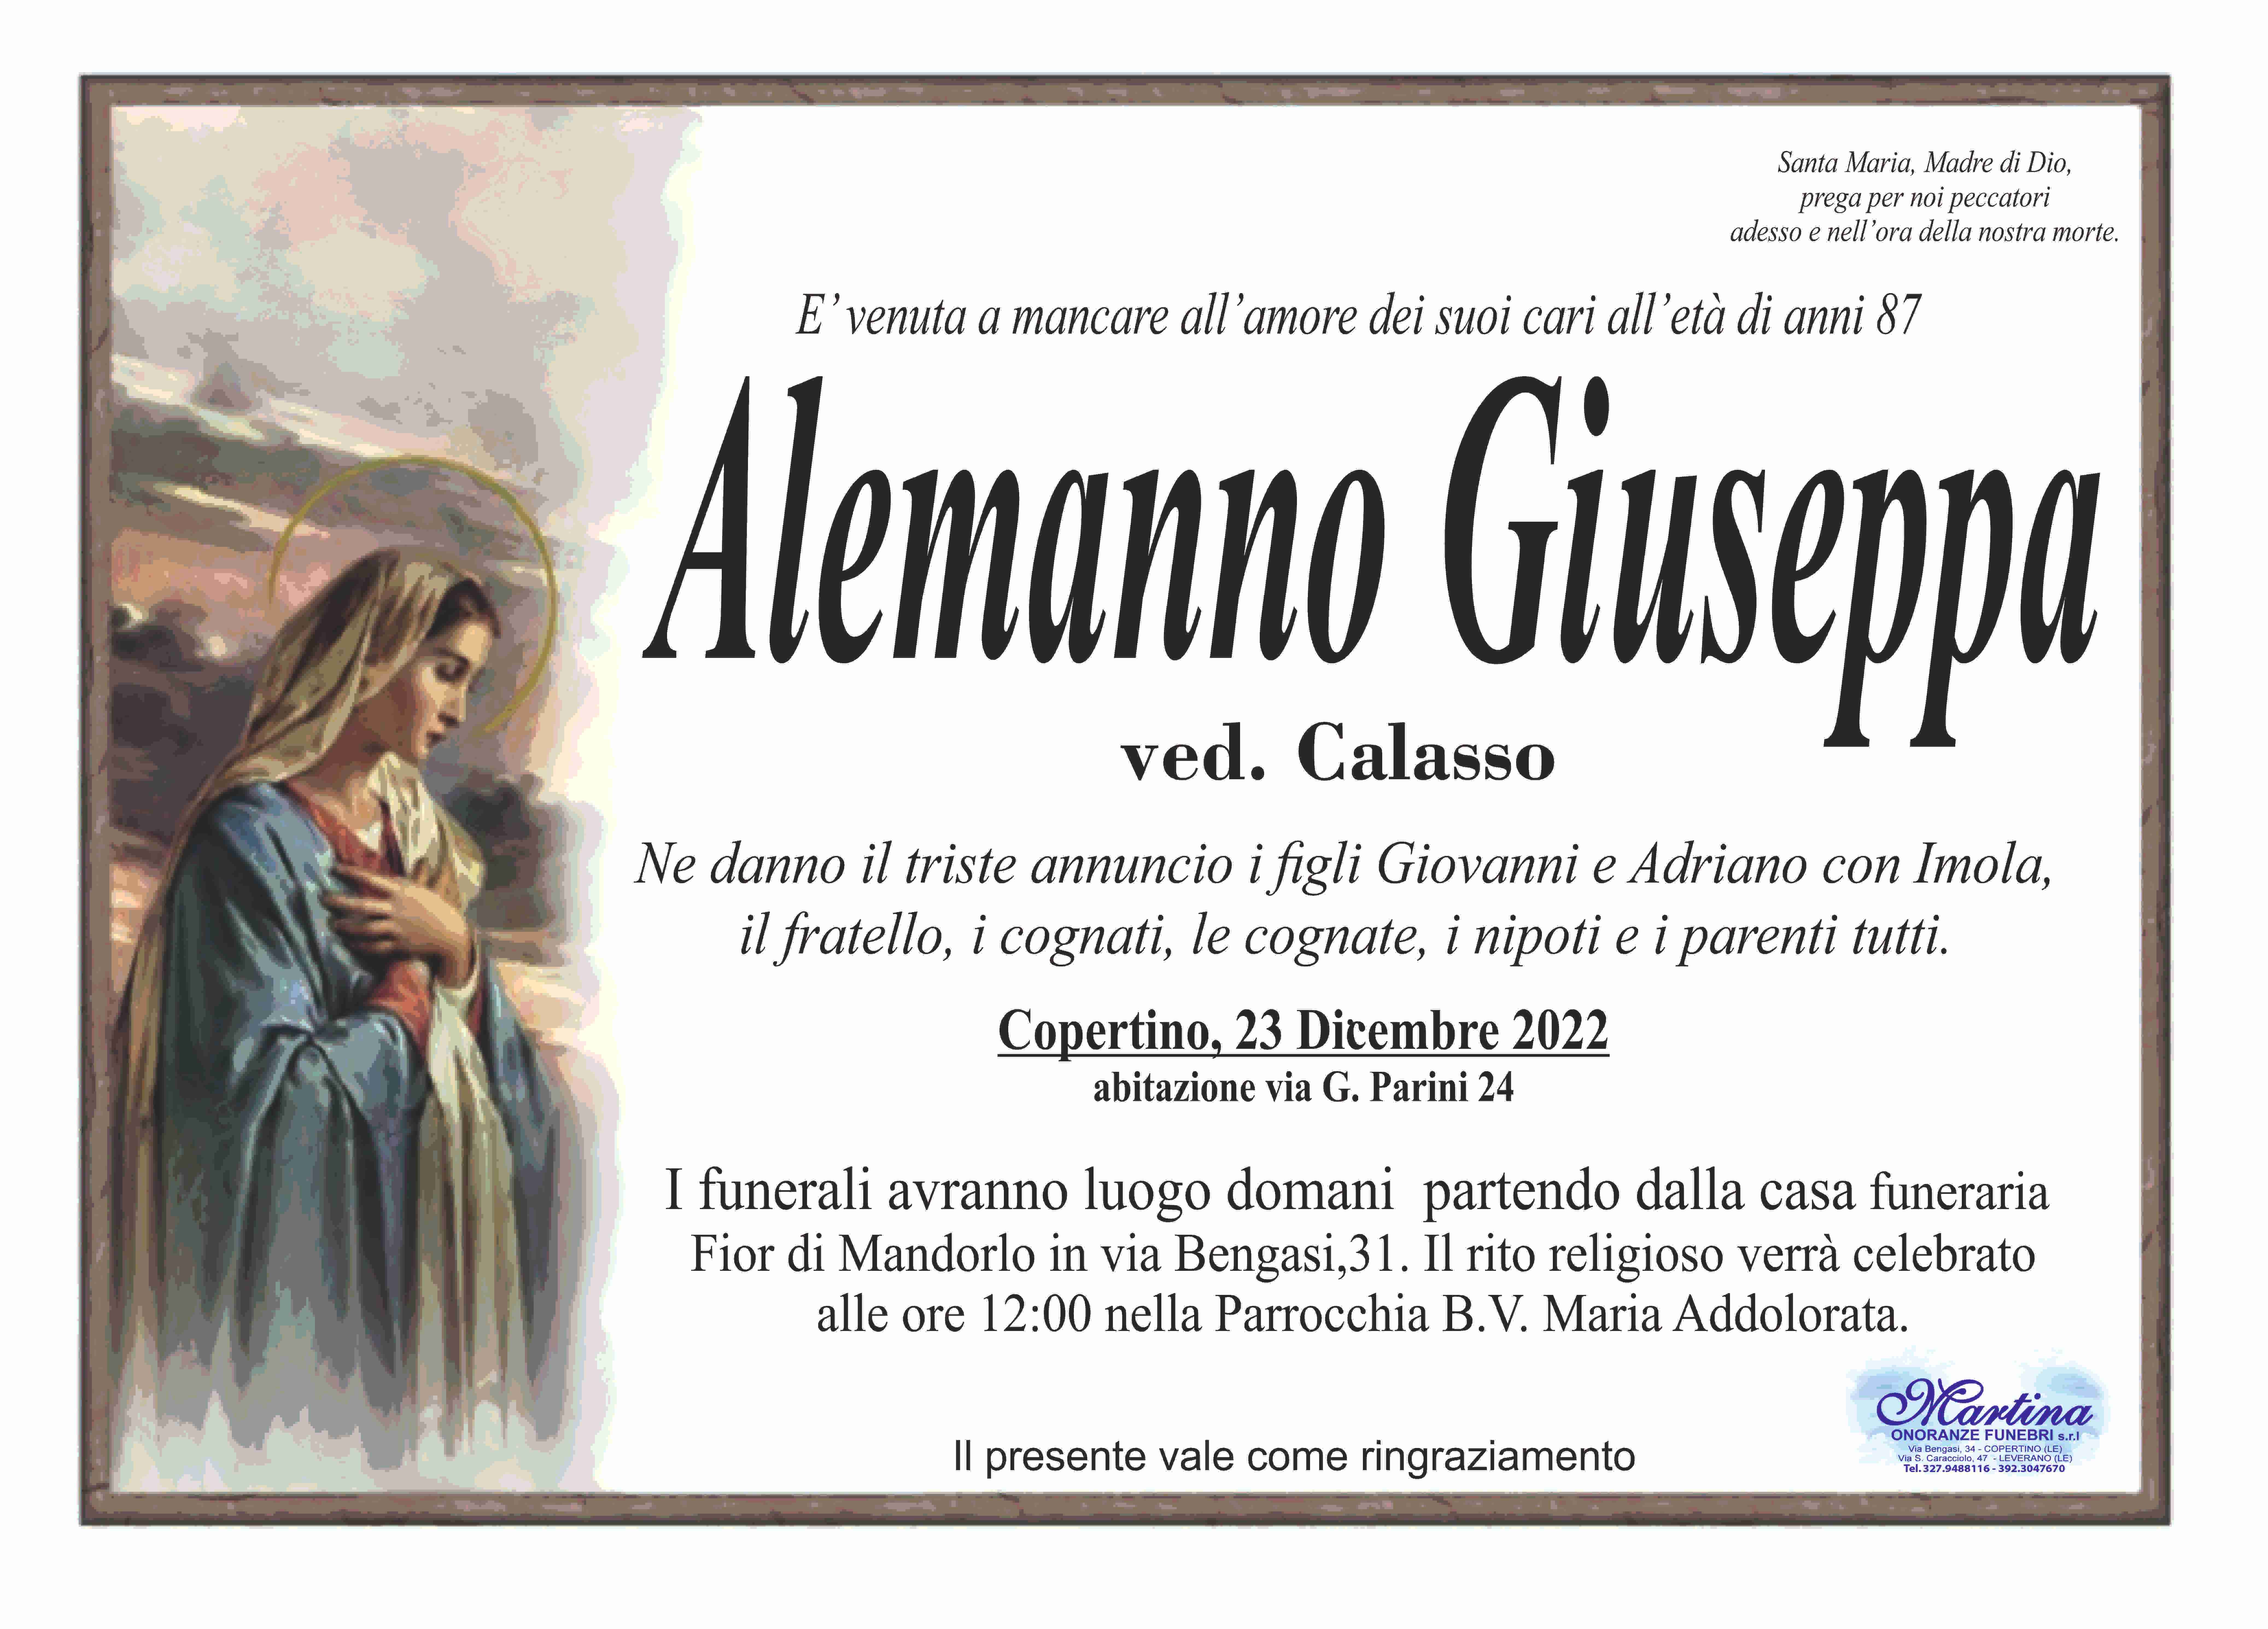 Giuseppa Alemanno